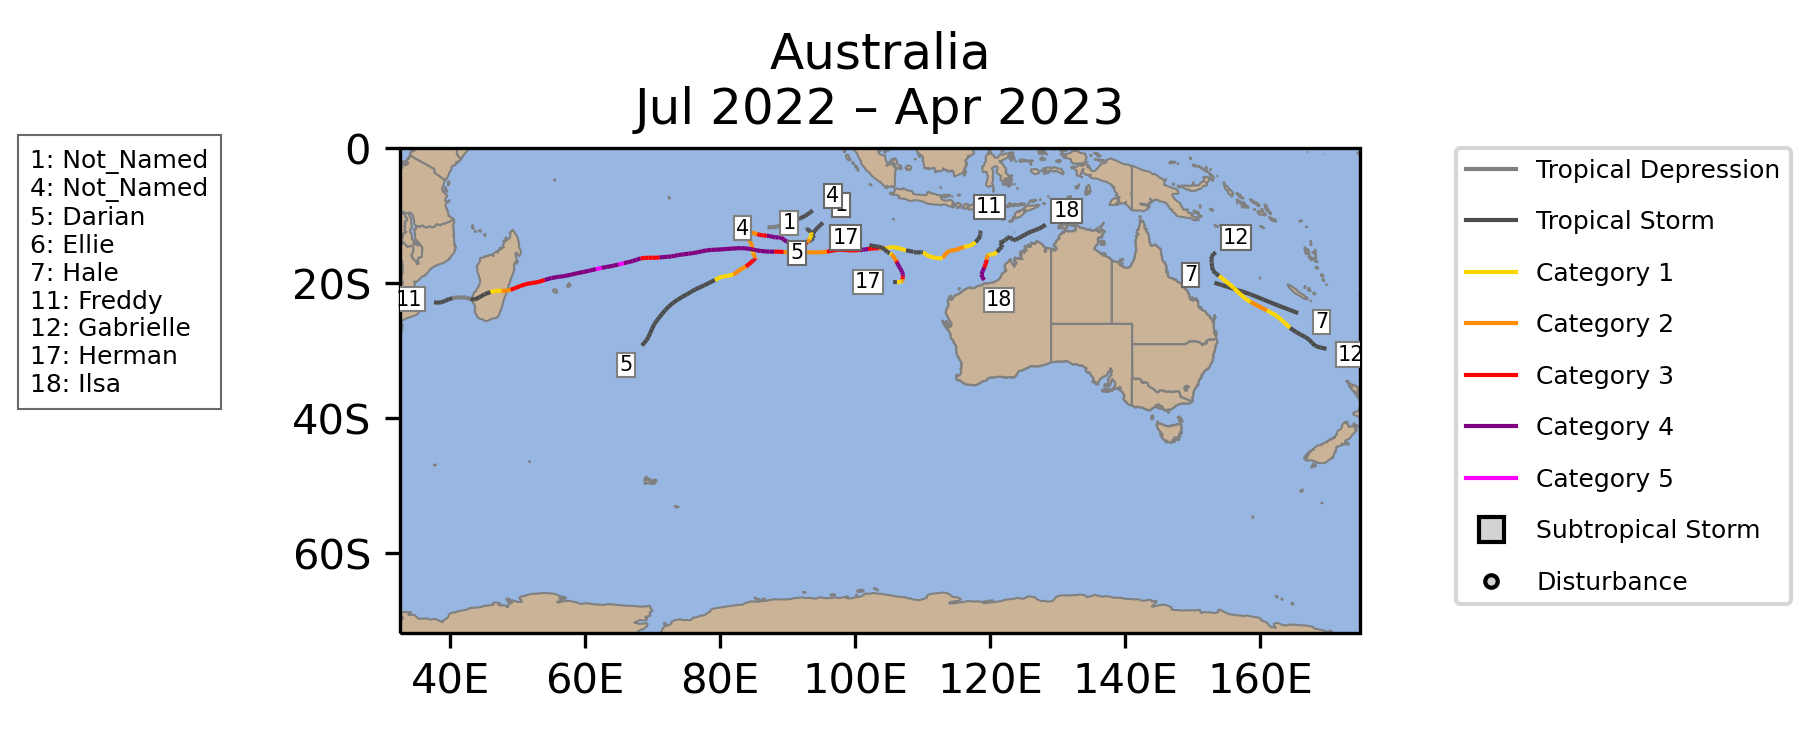 Australia Tropical Cyclone Storm Tracks July 2022-April 2023